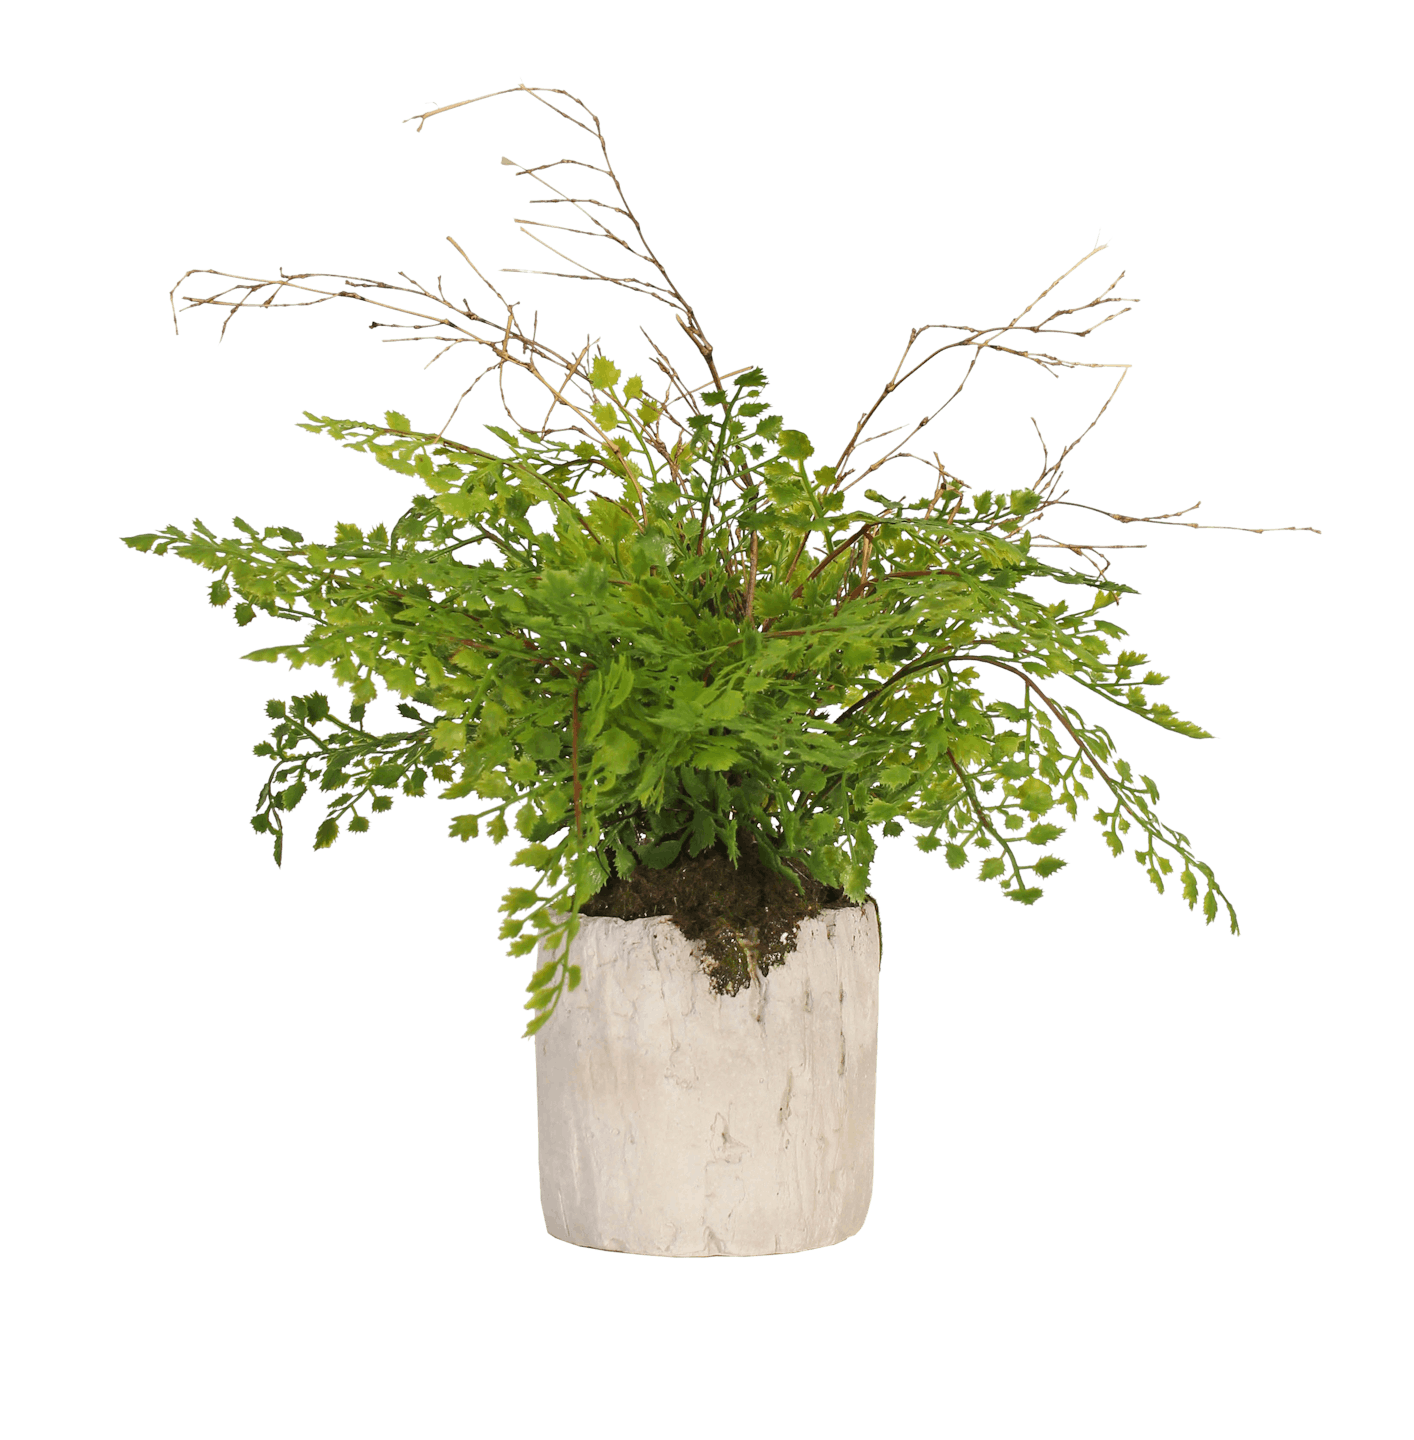 Artificial maidenhair fern